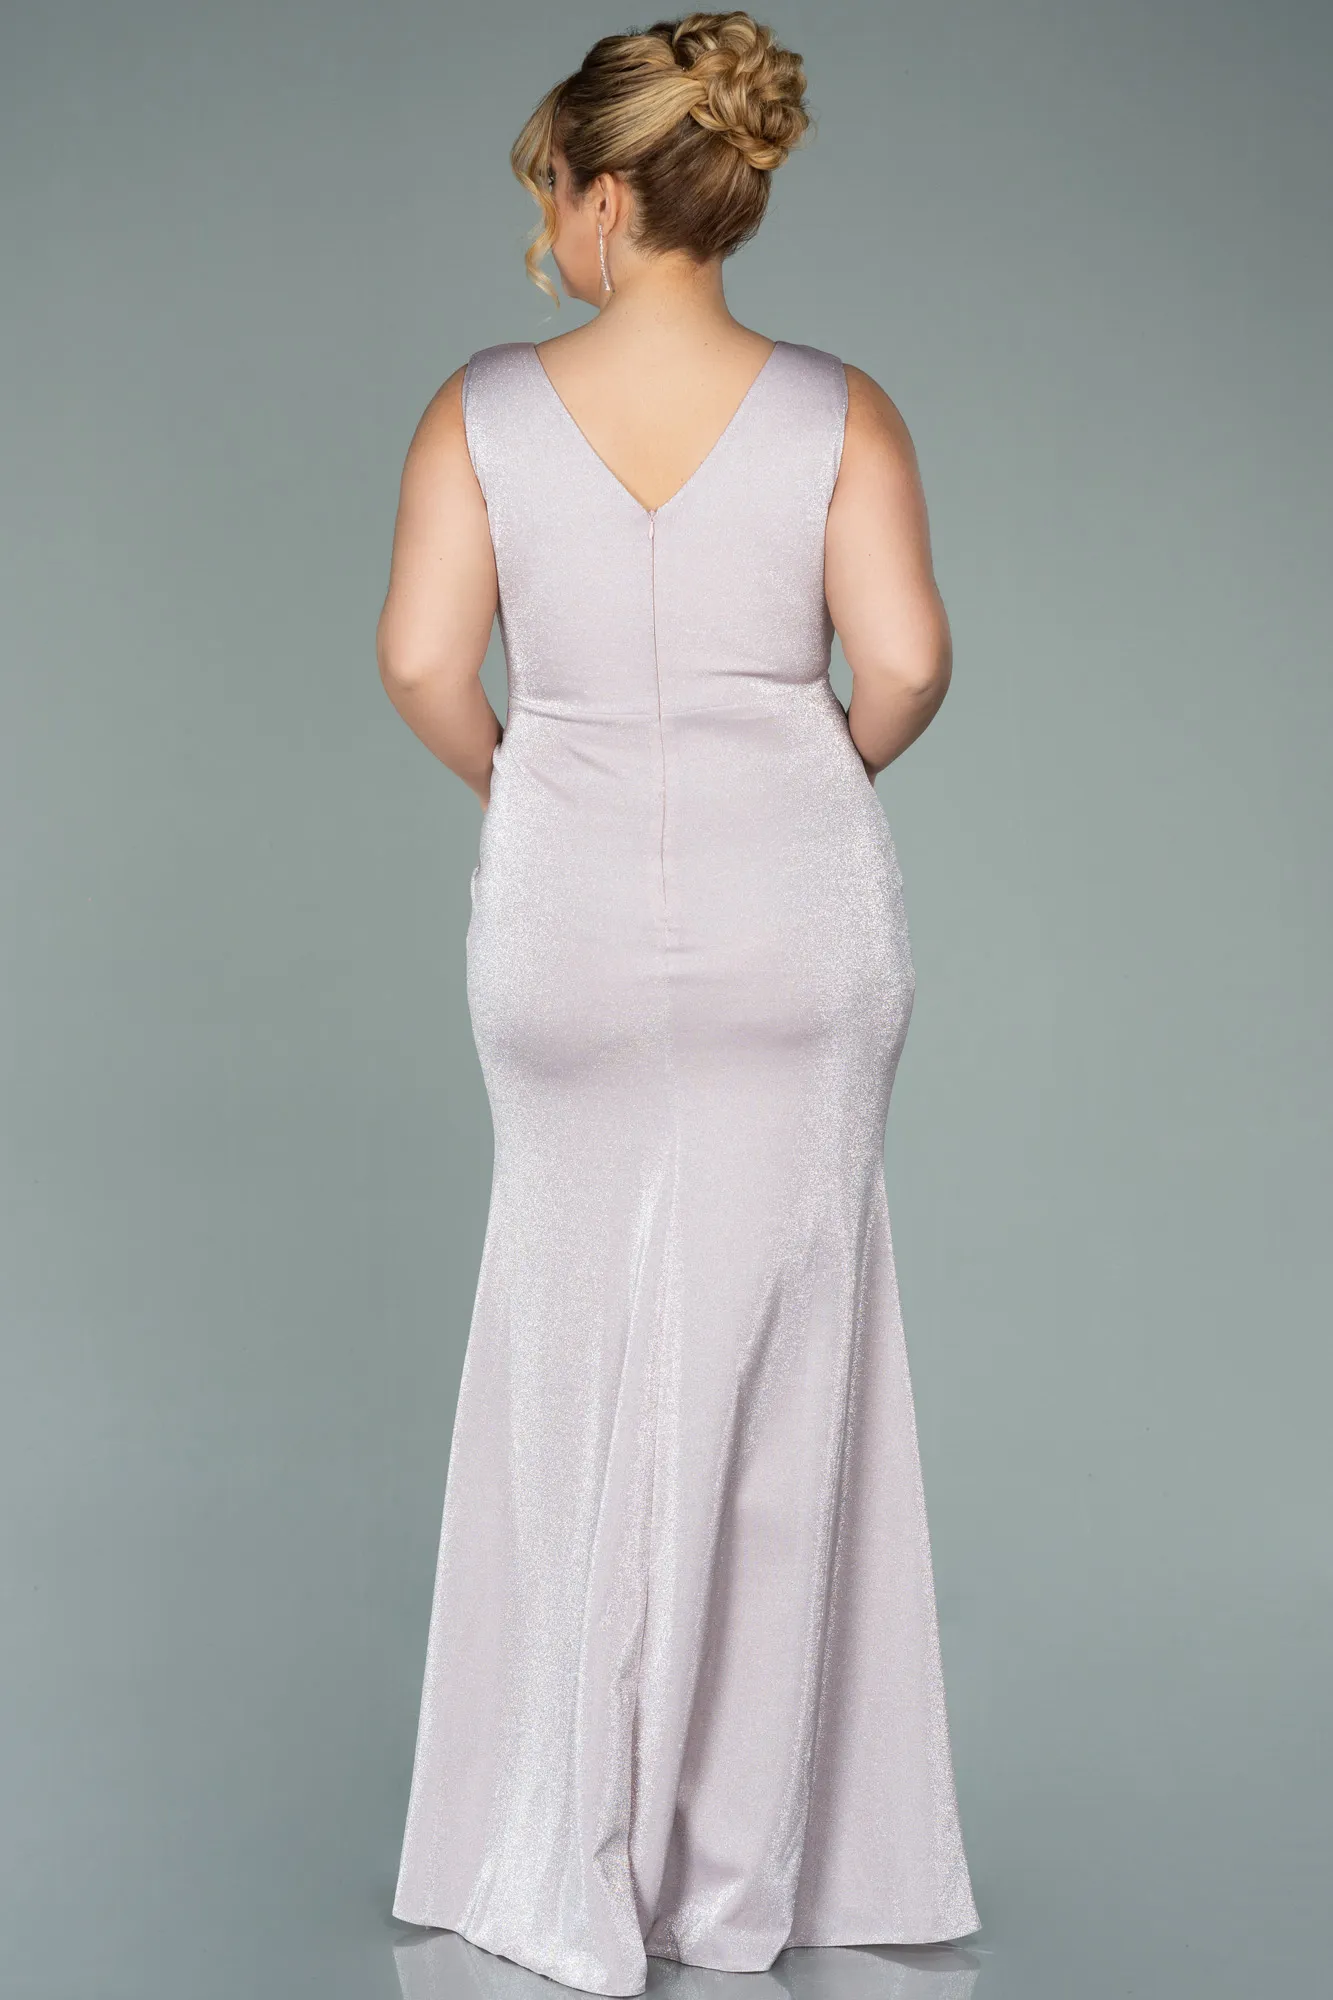 Powder Color-Long Oversized Evening Dress ABU1985